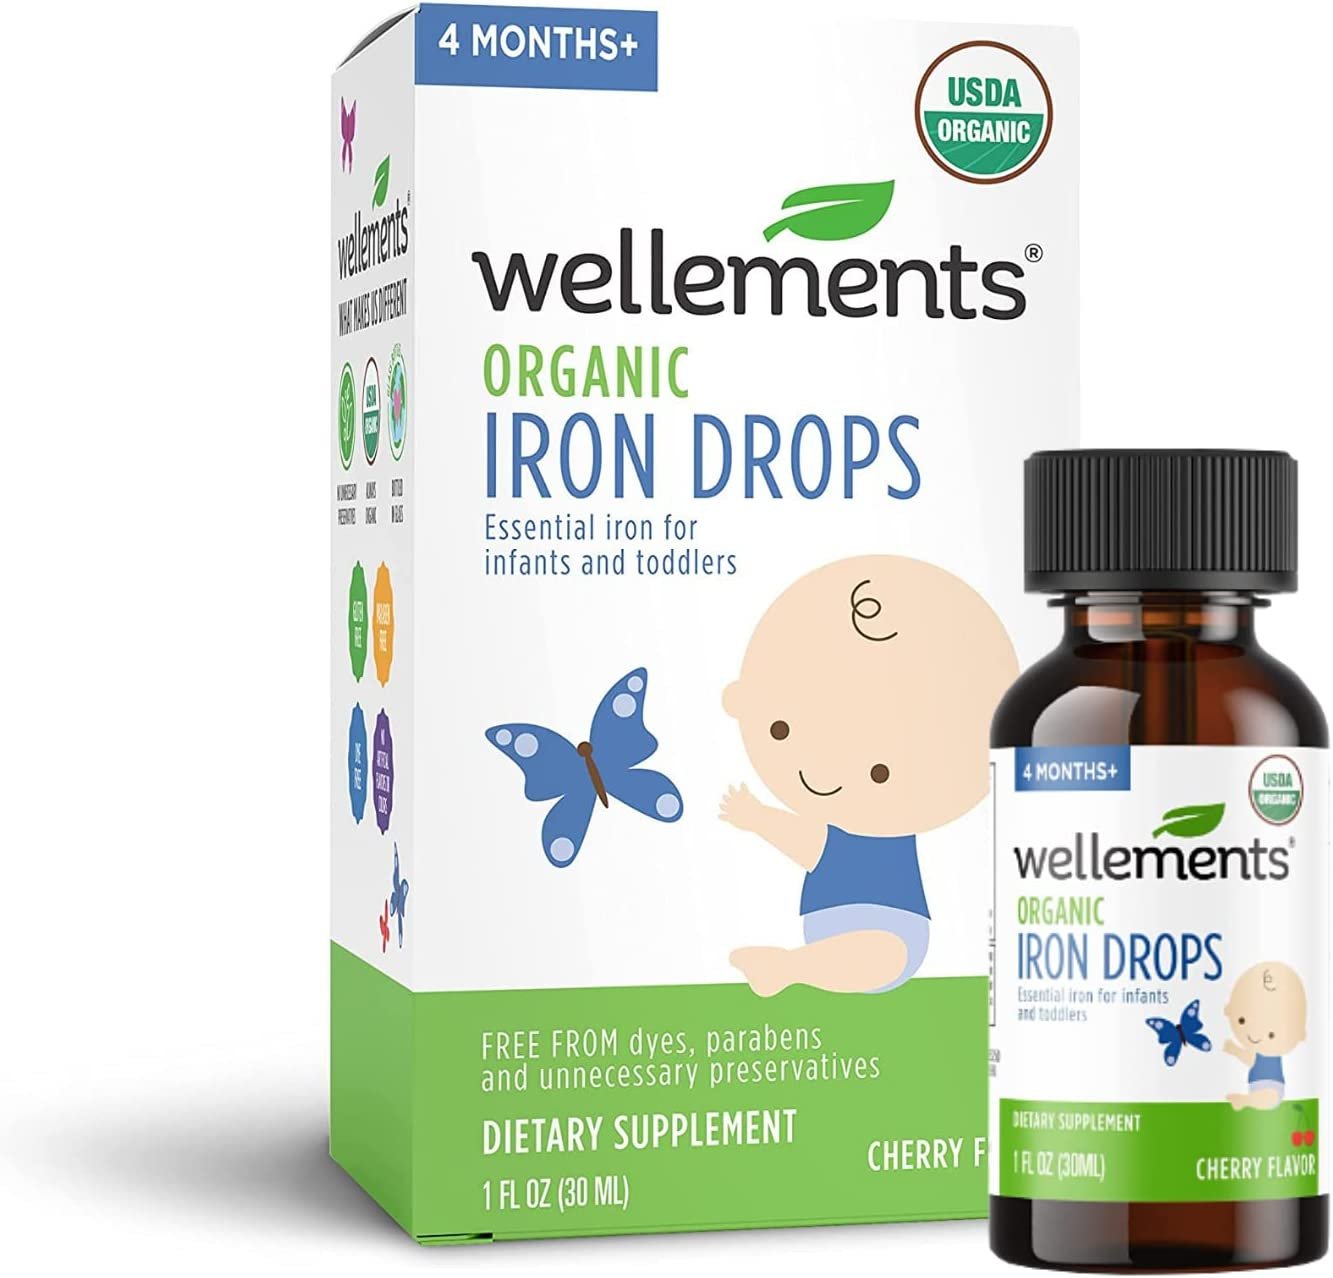 Wellements Organic Iron Drops*